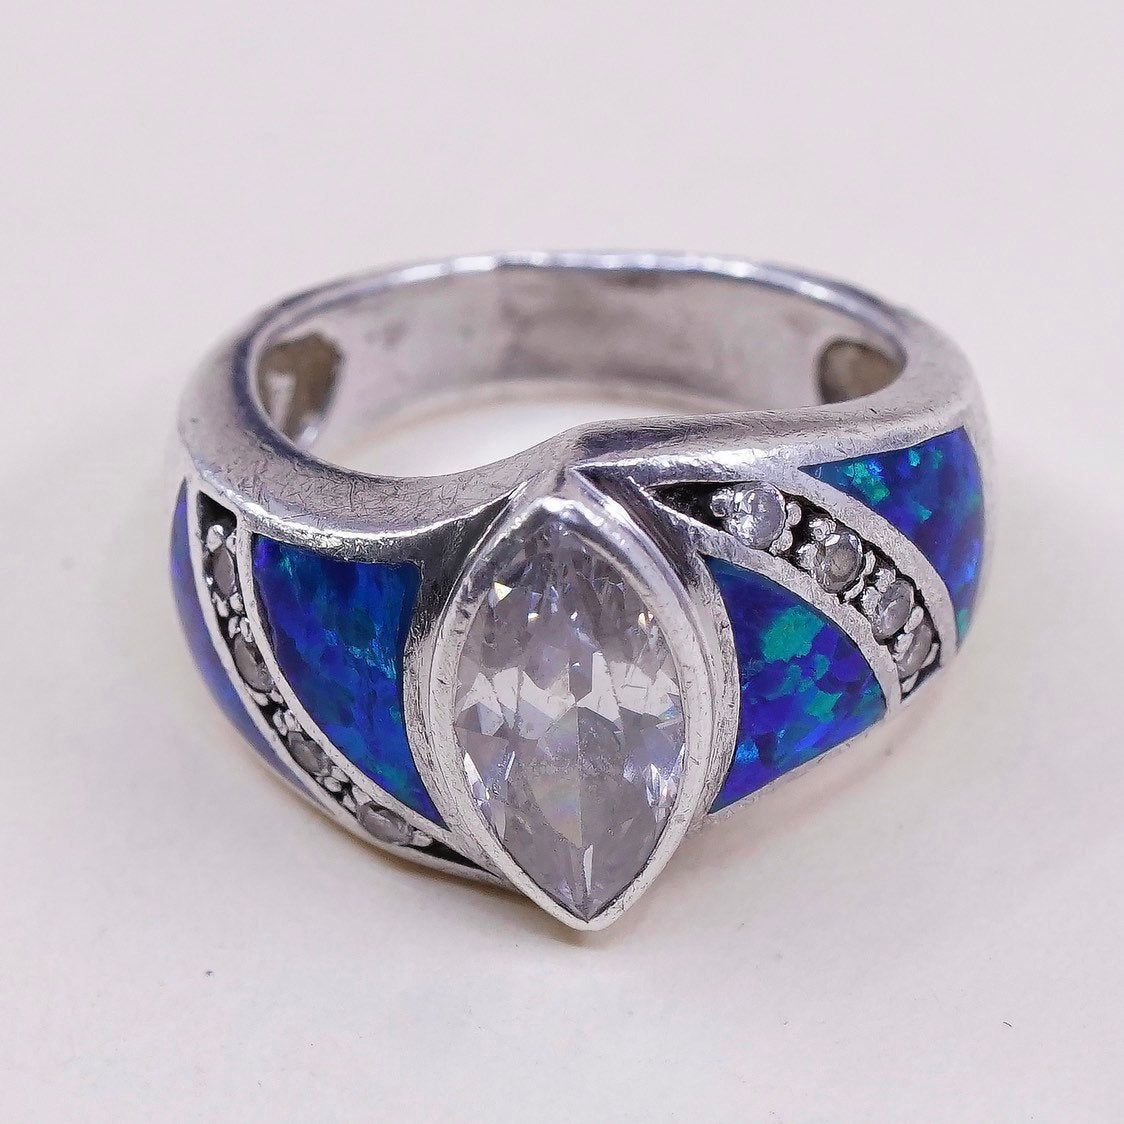 sz 5.75,vtg Sterling silver handmade ring, 925 band w/ fire opal n marquise cz